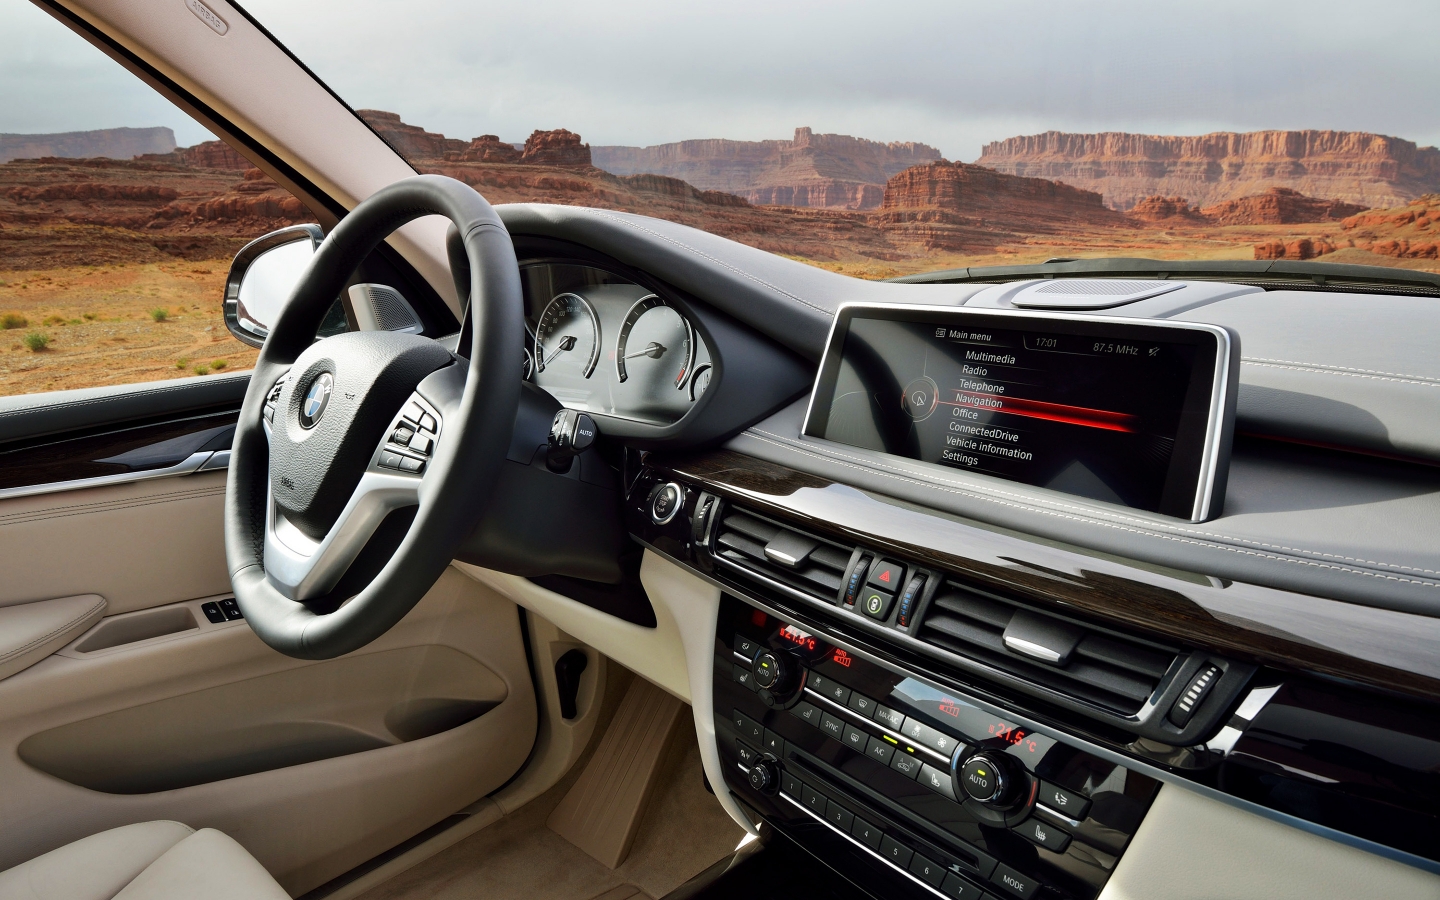 BMW X5 2014 Dashboard for 1440 x 900 widescreen resolution